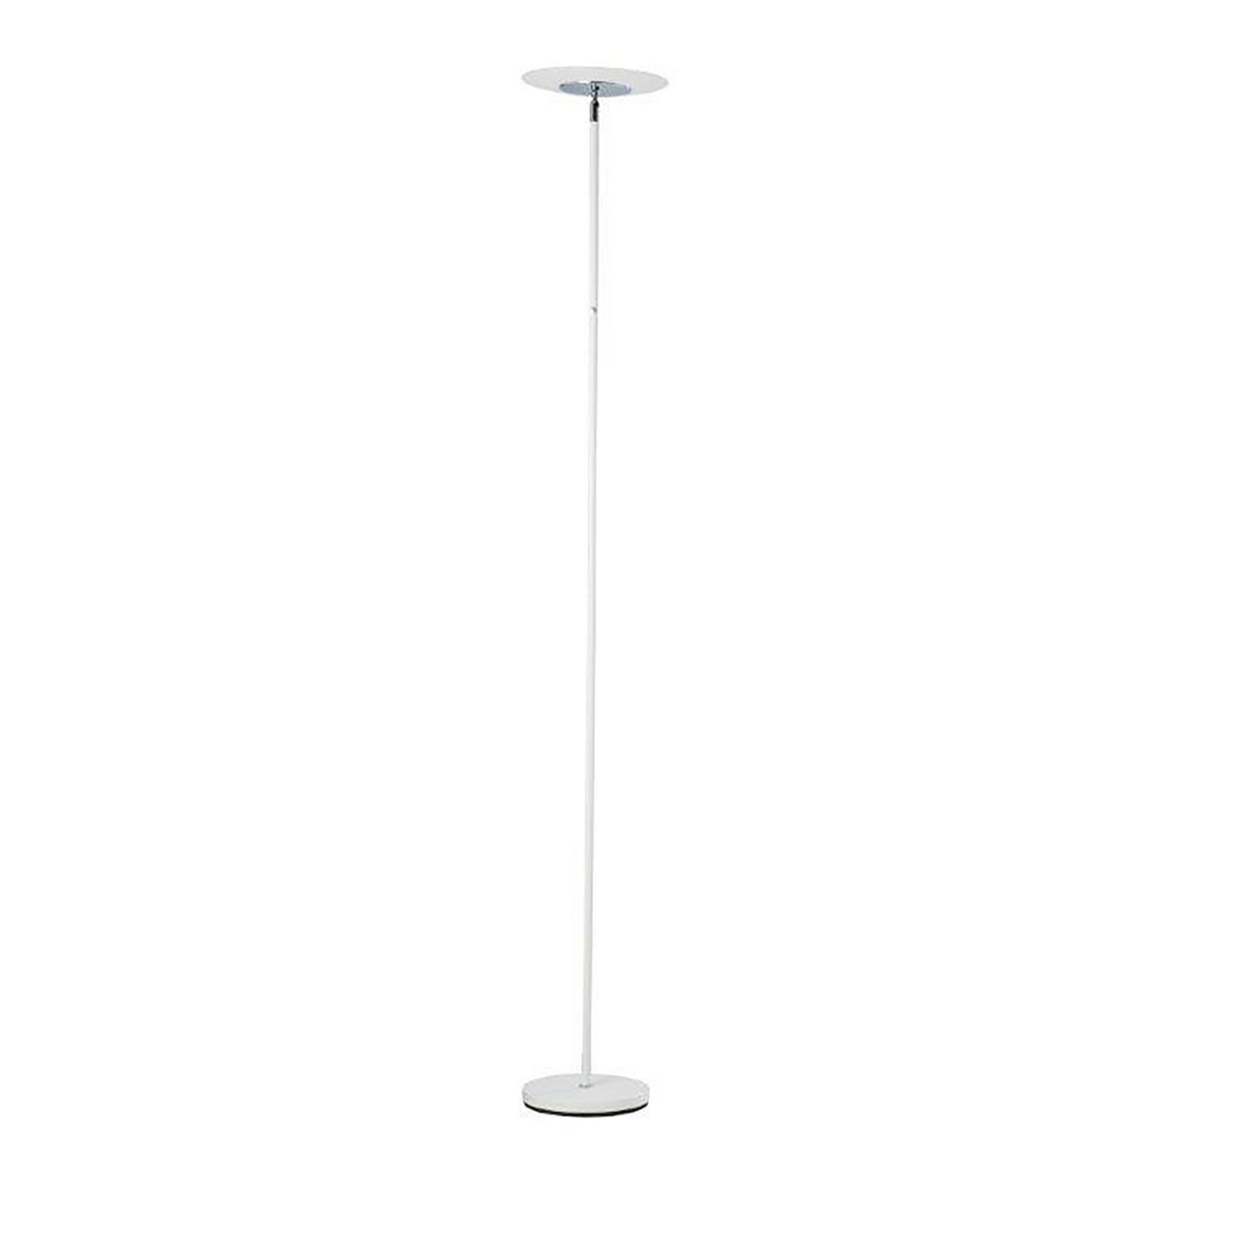 Floor Lamp With Adjustable Torchiere Head And Sleek Metal Body, White- Saltoro Sherpi